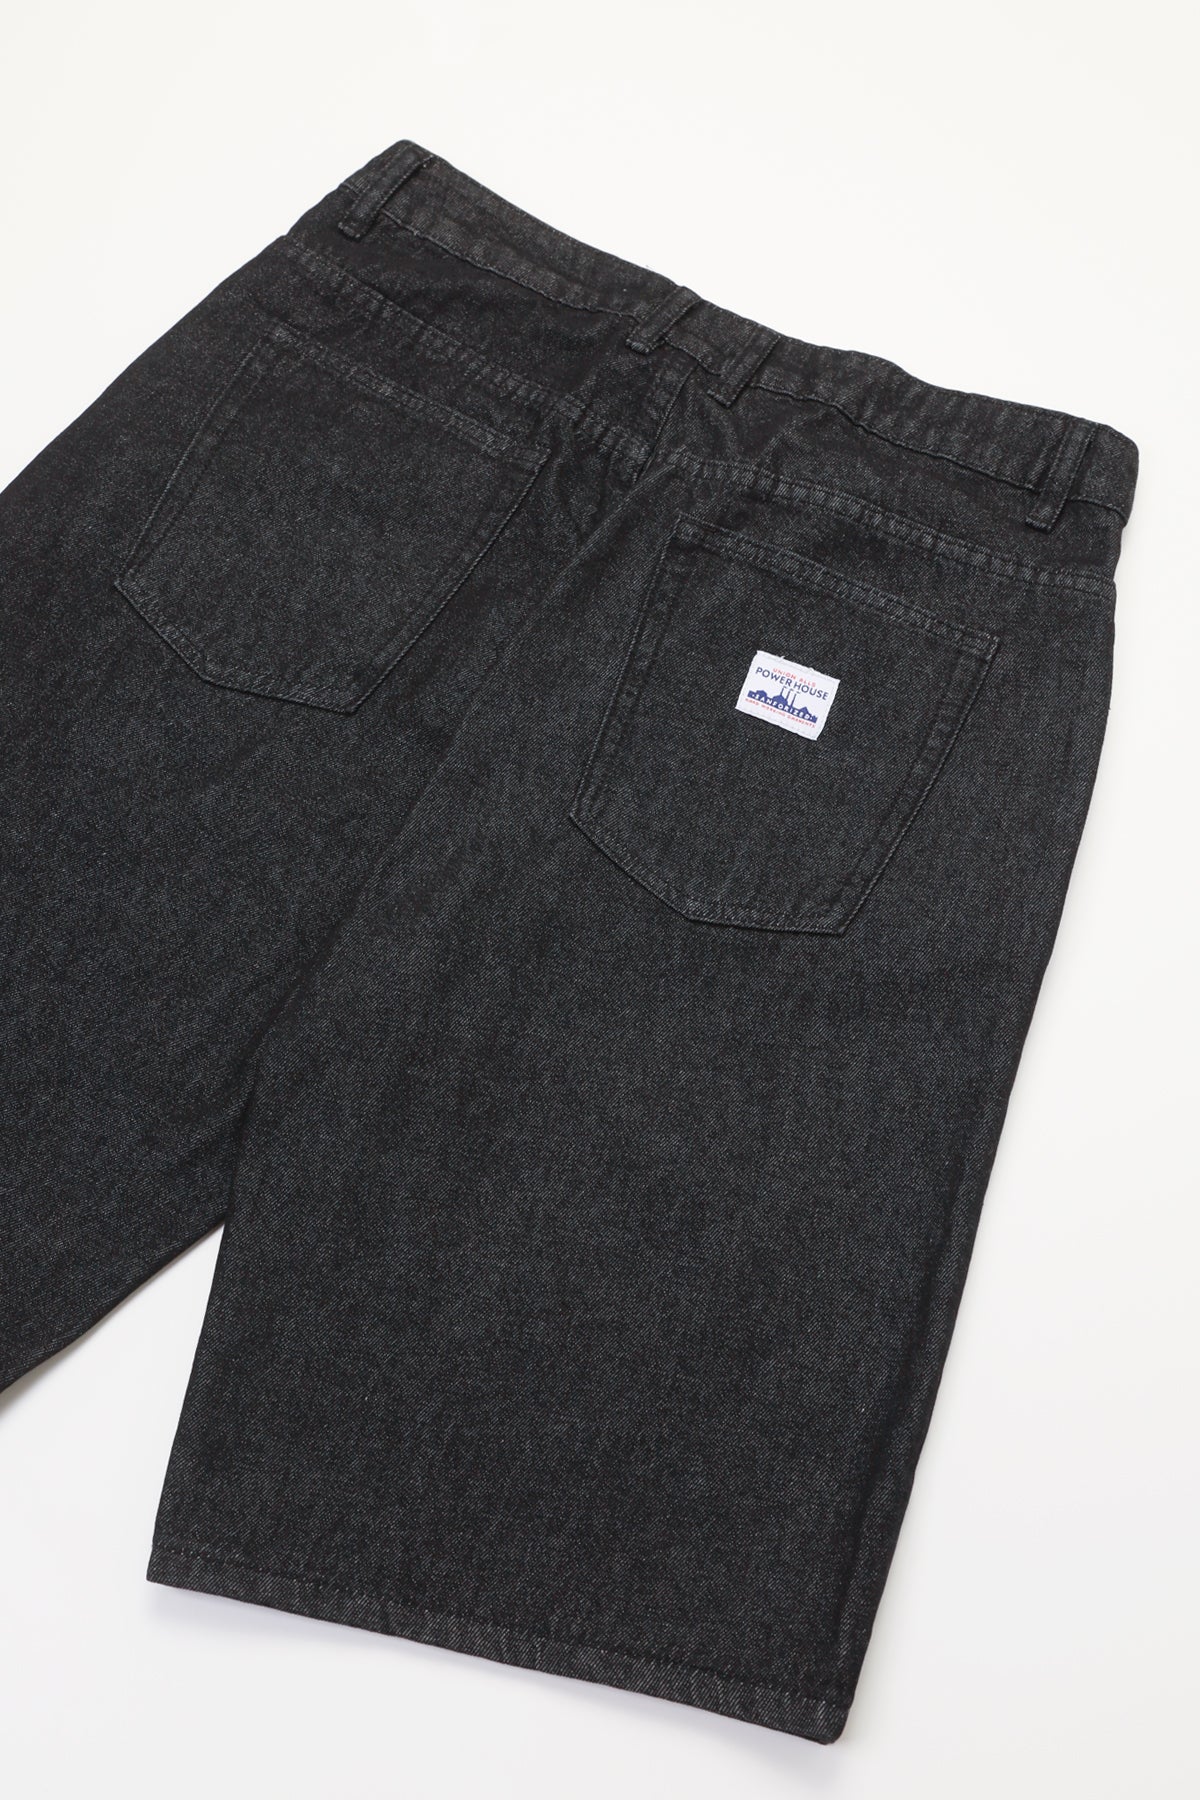 Power Goods - 90's Denim Shorts - Washed Black